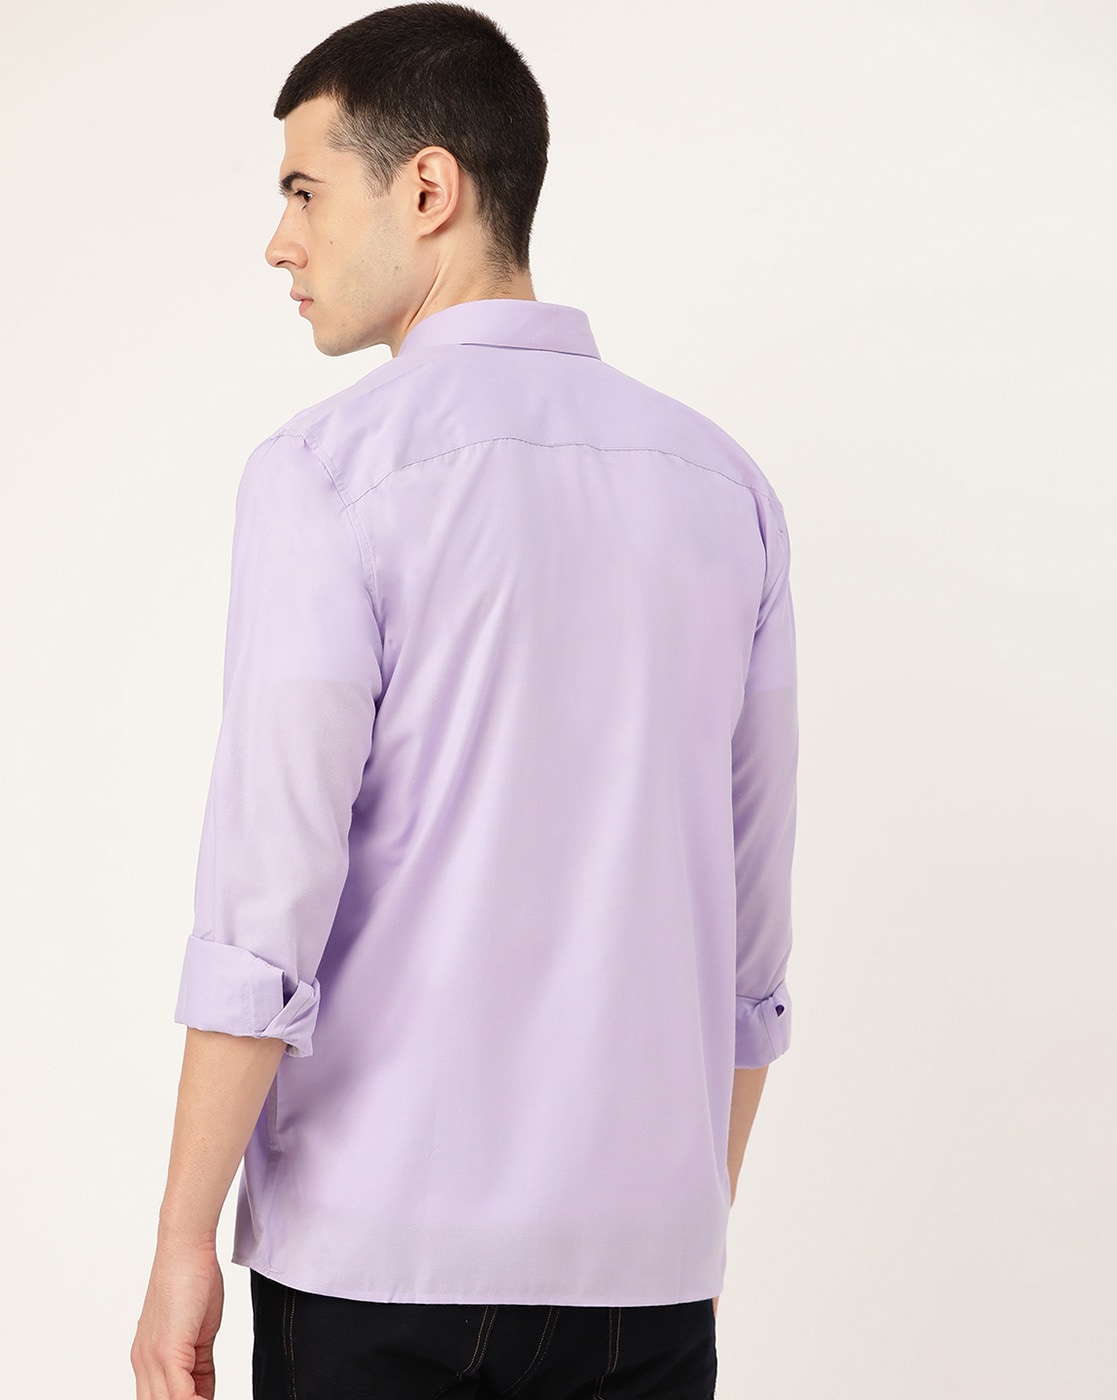 Men's Cotton Purple Formal Classic Shirt - Sojanya  Shirt outfit men,  Purple shirt outfits, Business casual men